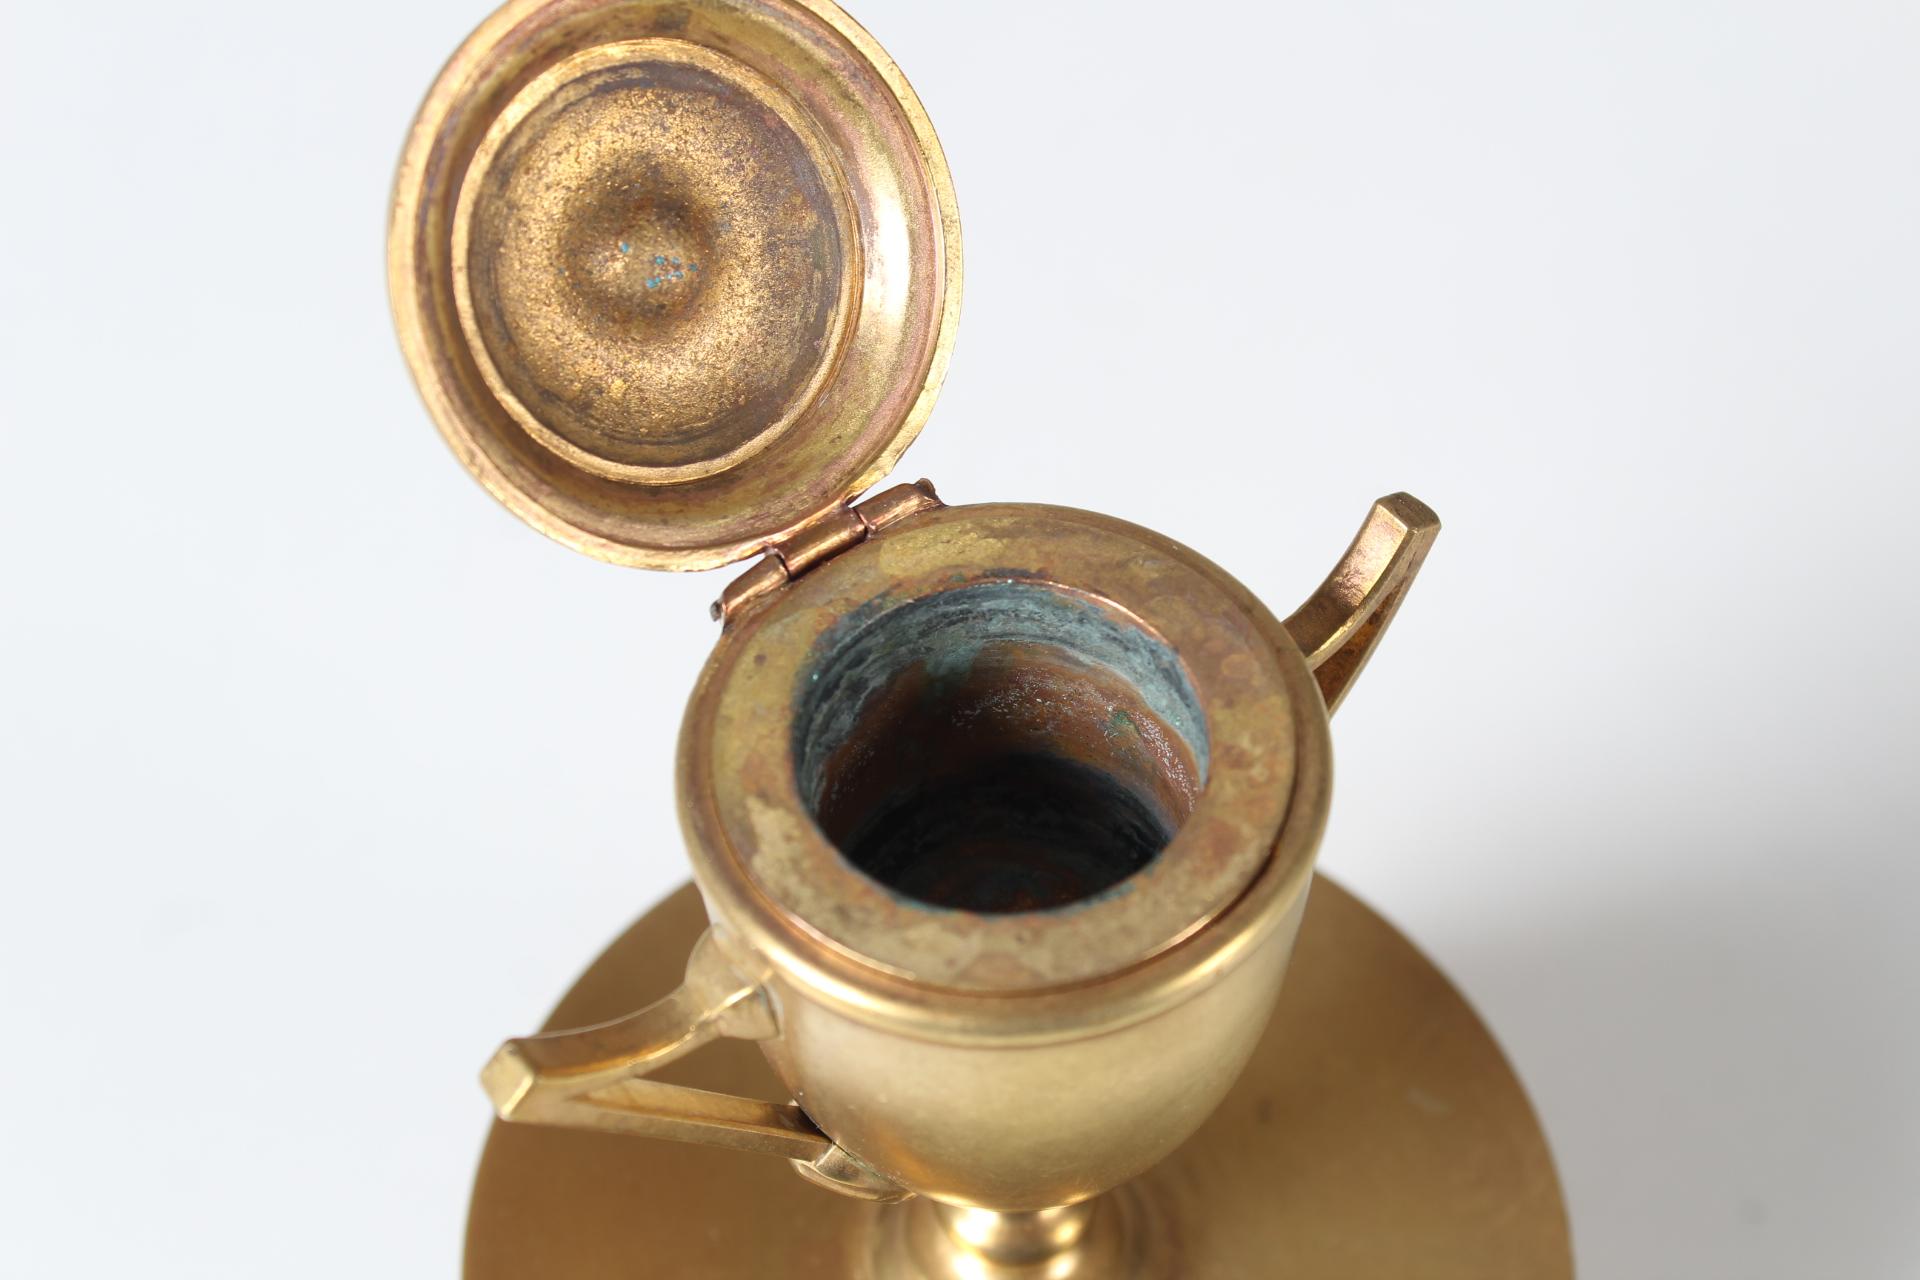 Antique Inkwell, Gilded Bronze, Antique Desk Utensil, Vase-Shaped For Sale 4